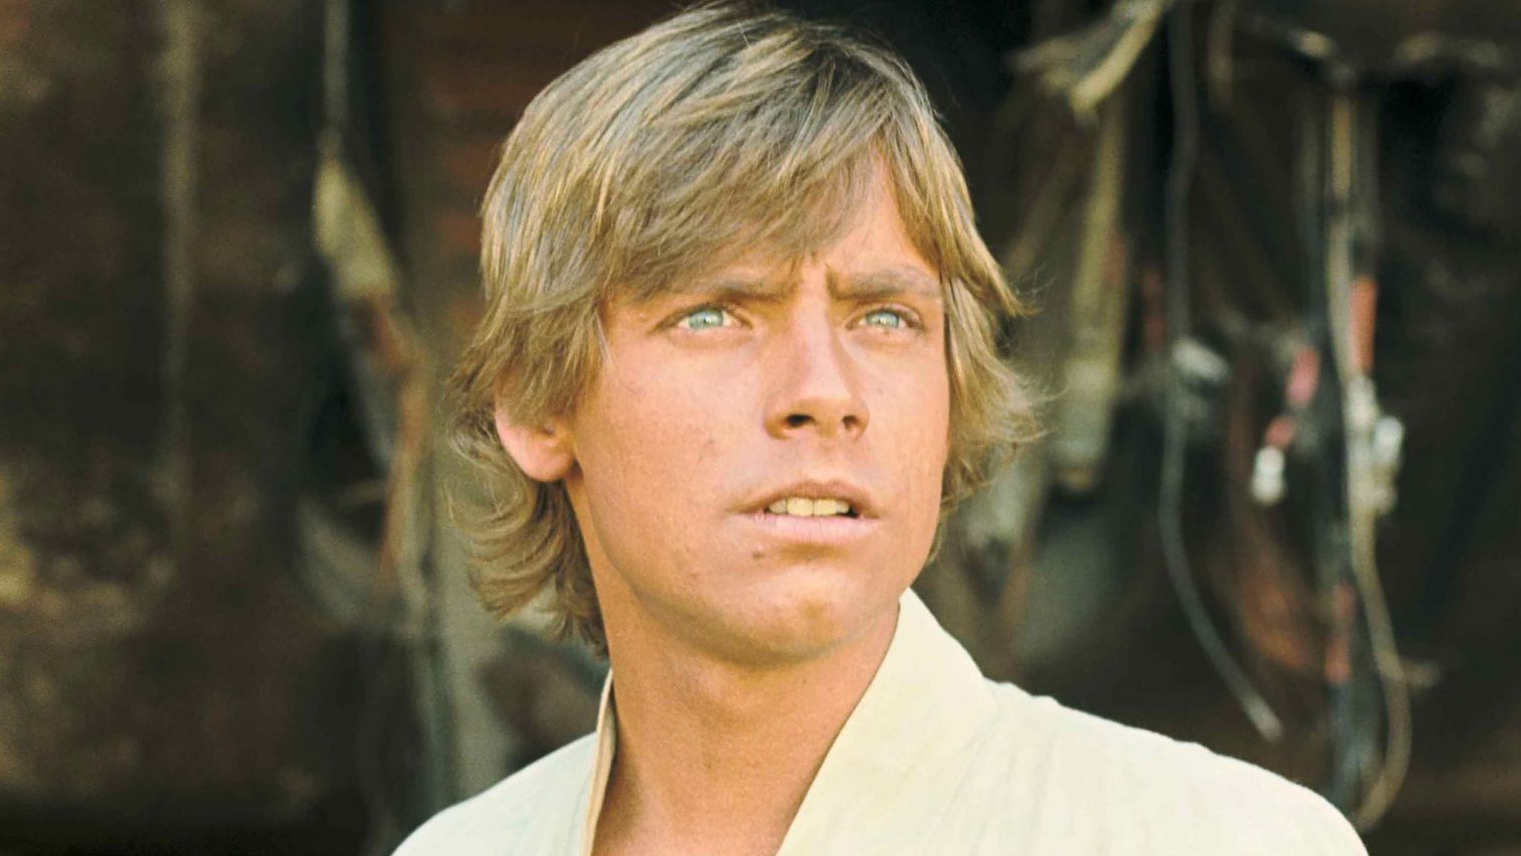 Mark Hamill Star Wars Luke Skywalker Life Mask Cast Jedi 